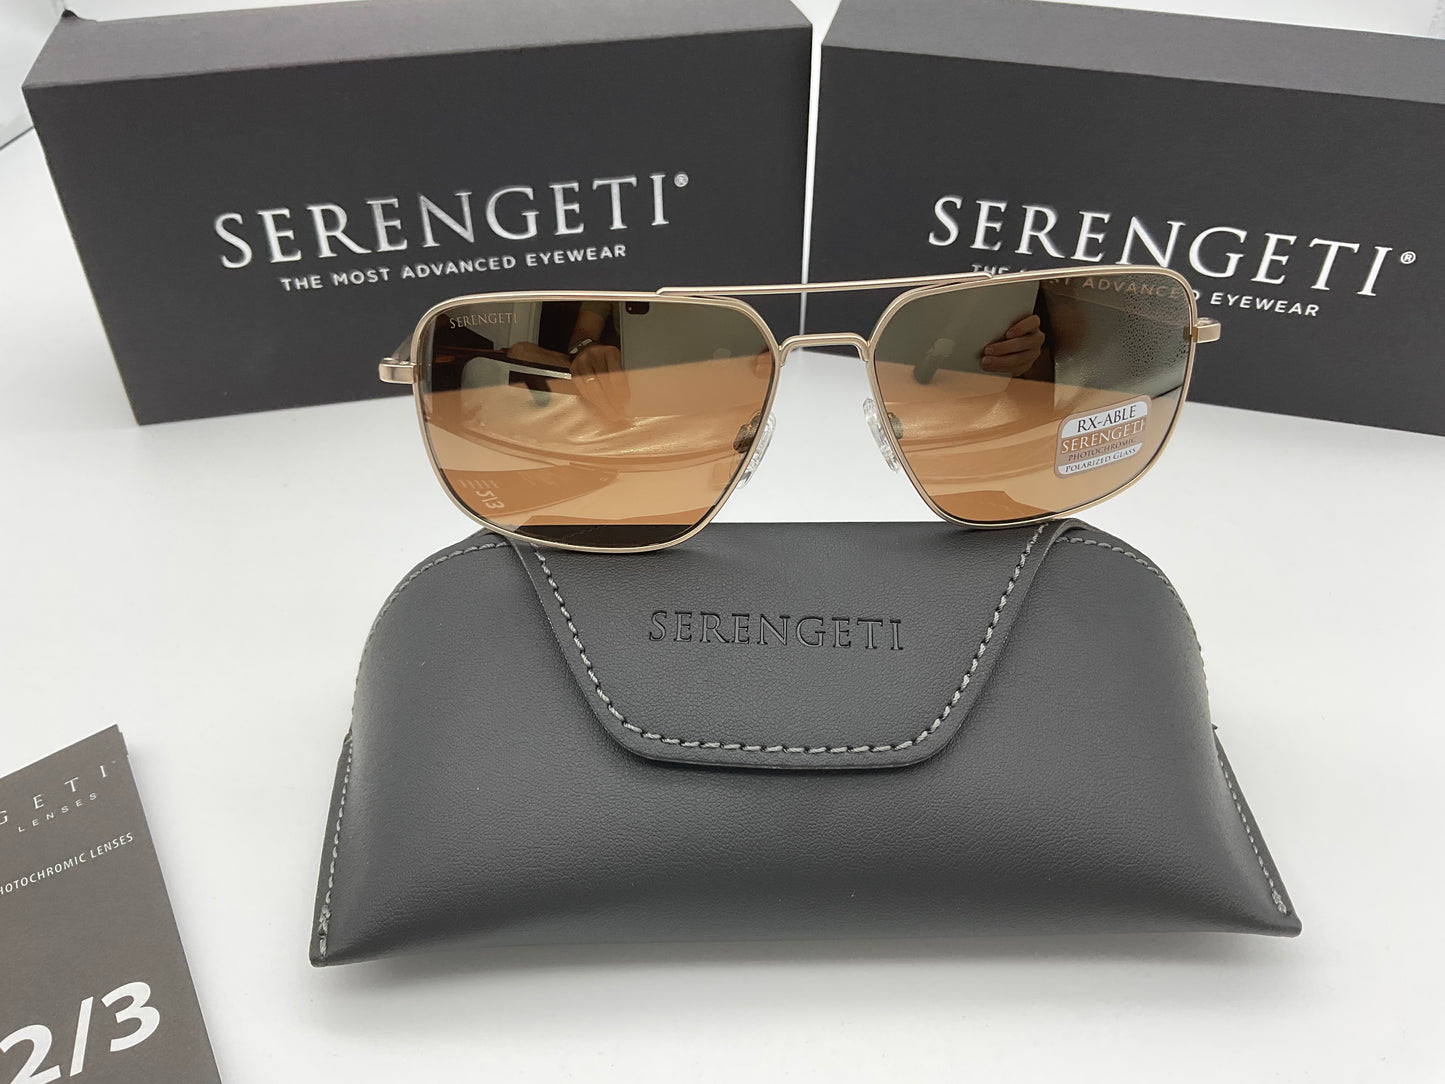 Serengeti Agostino Polarized Drivers Photochromic Glass Soft Gold Lens 8824 Navigator Sunglasses Japan